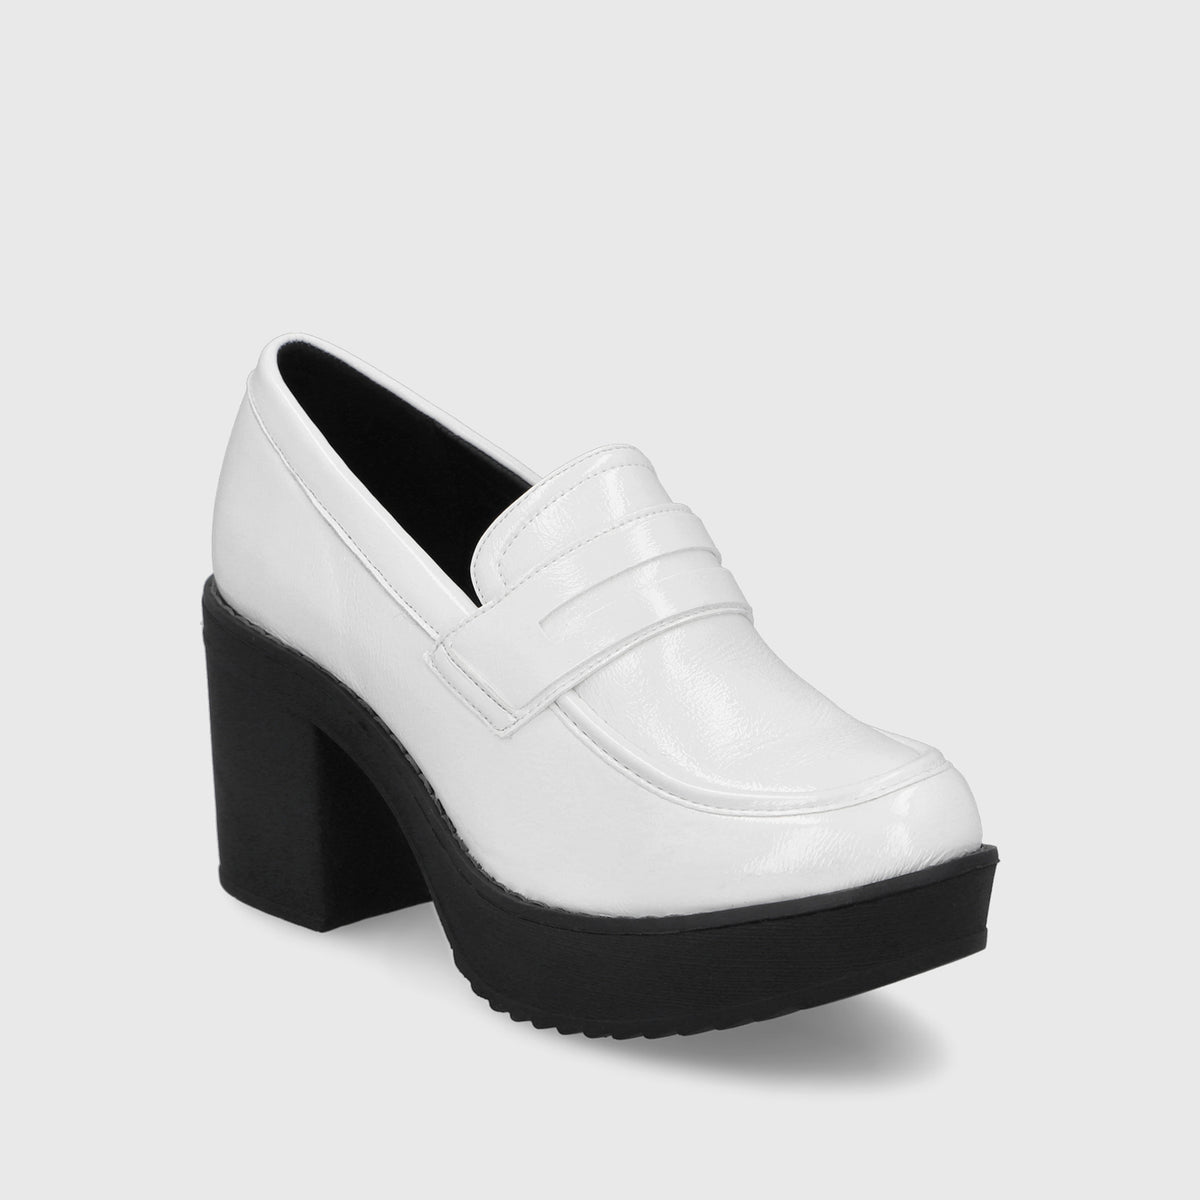 Zapato Blanco Charol Mujer 13503